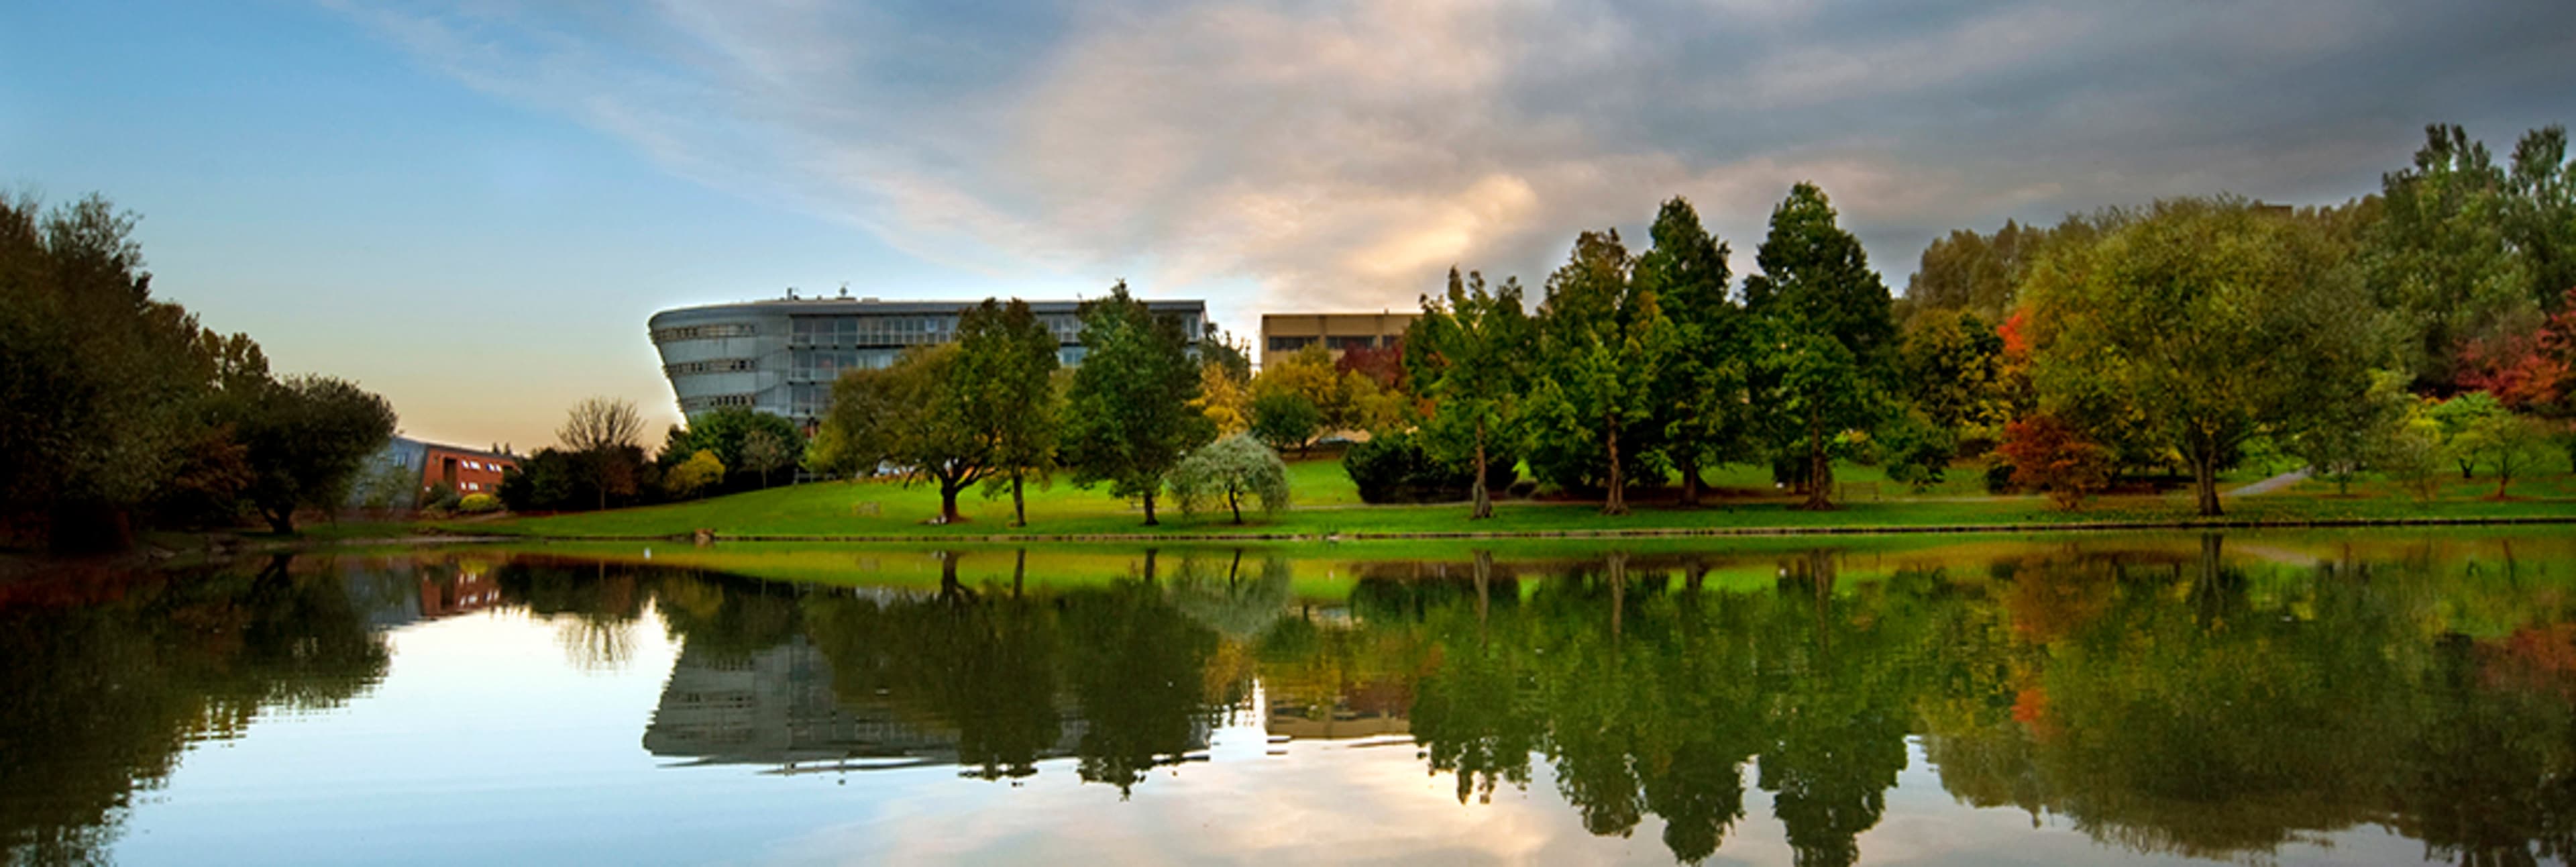 University of Surrey 